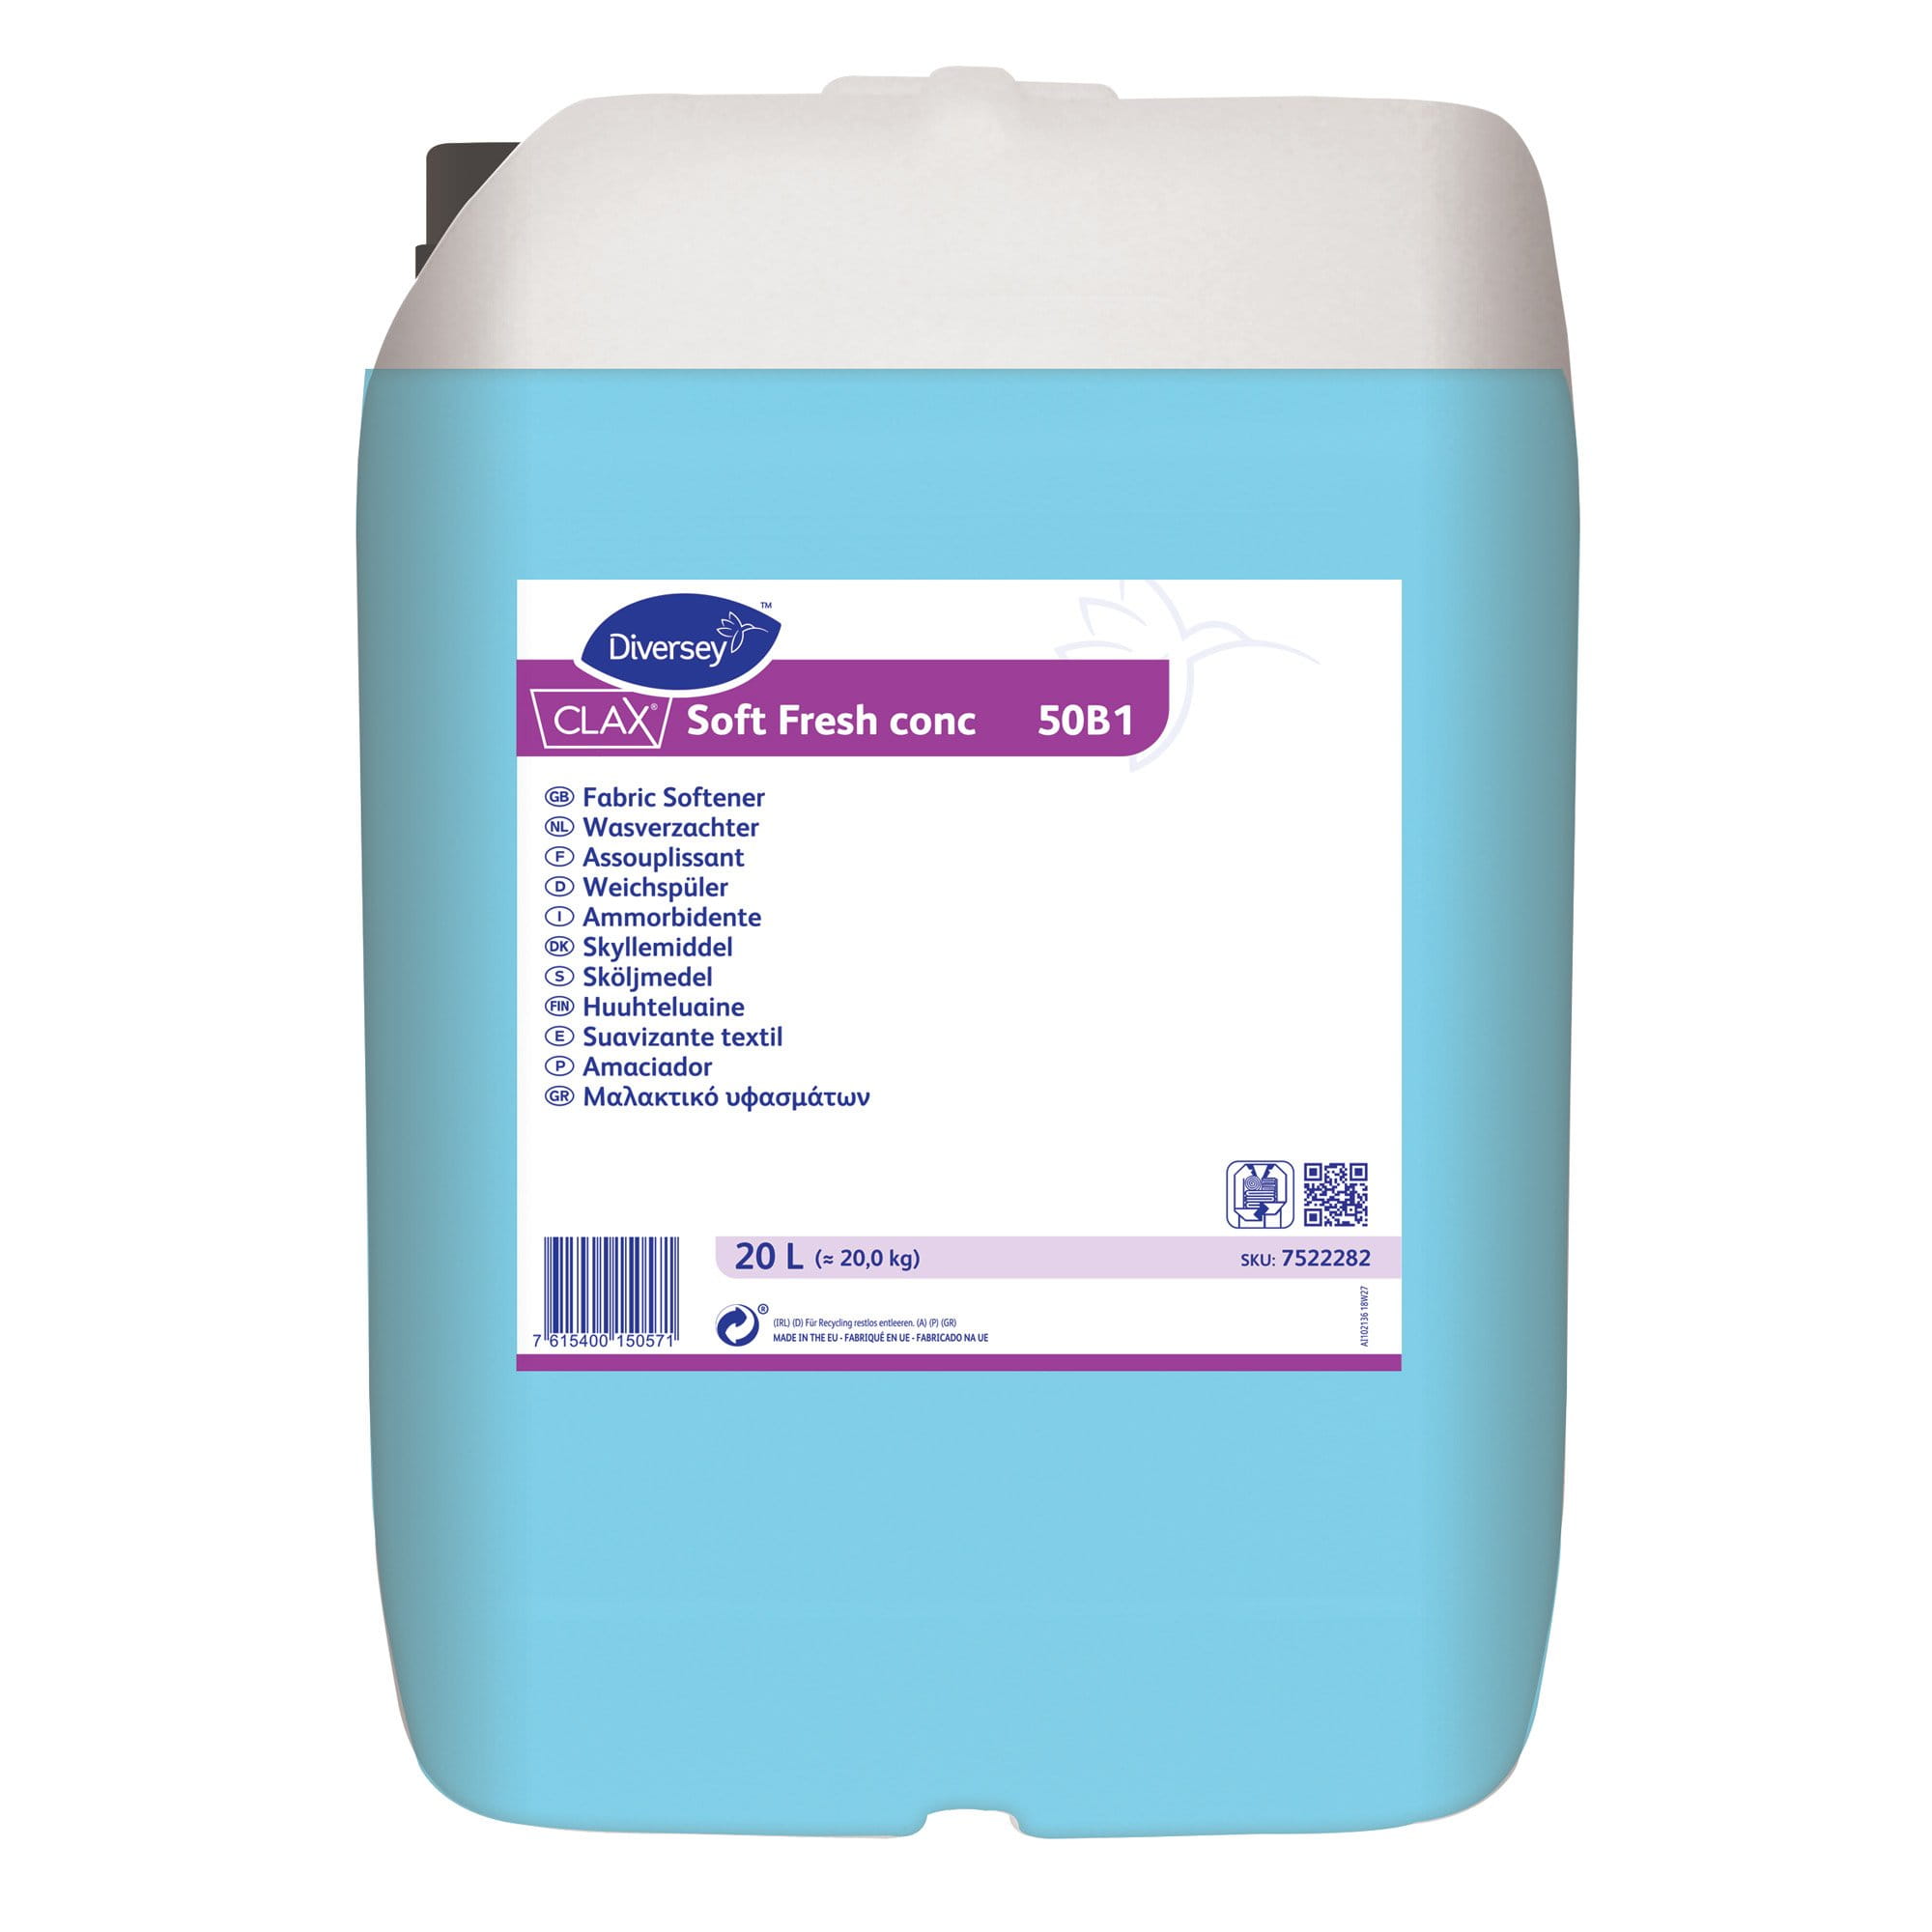 Clax Soft Fresh conc 50B1 Weichspüler Konzentrat 20 Liter Kanister 7522282_1